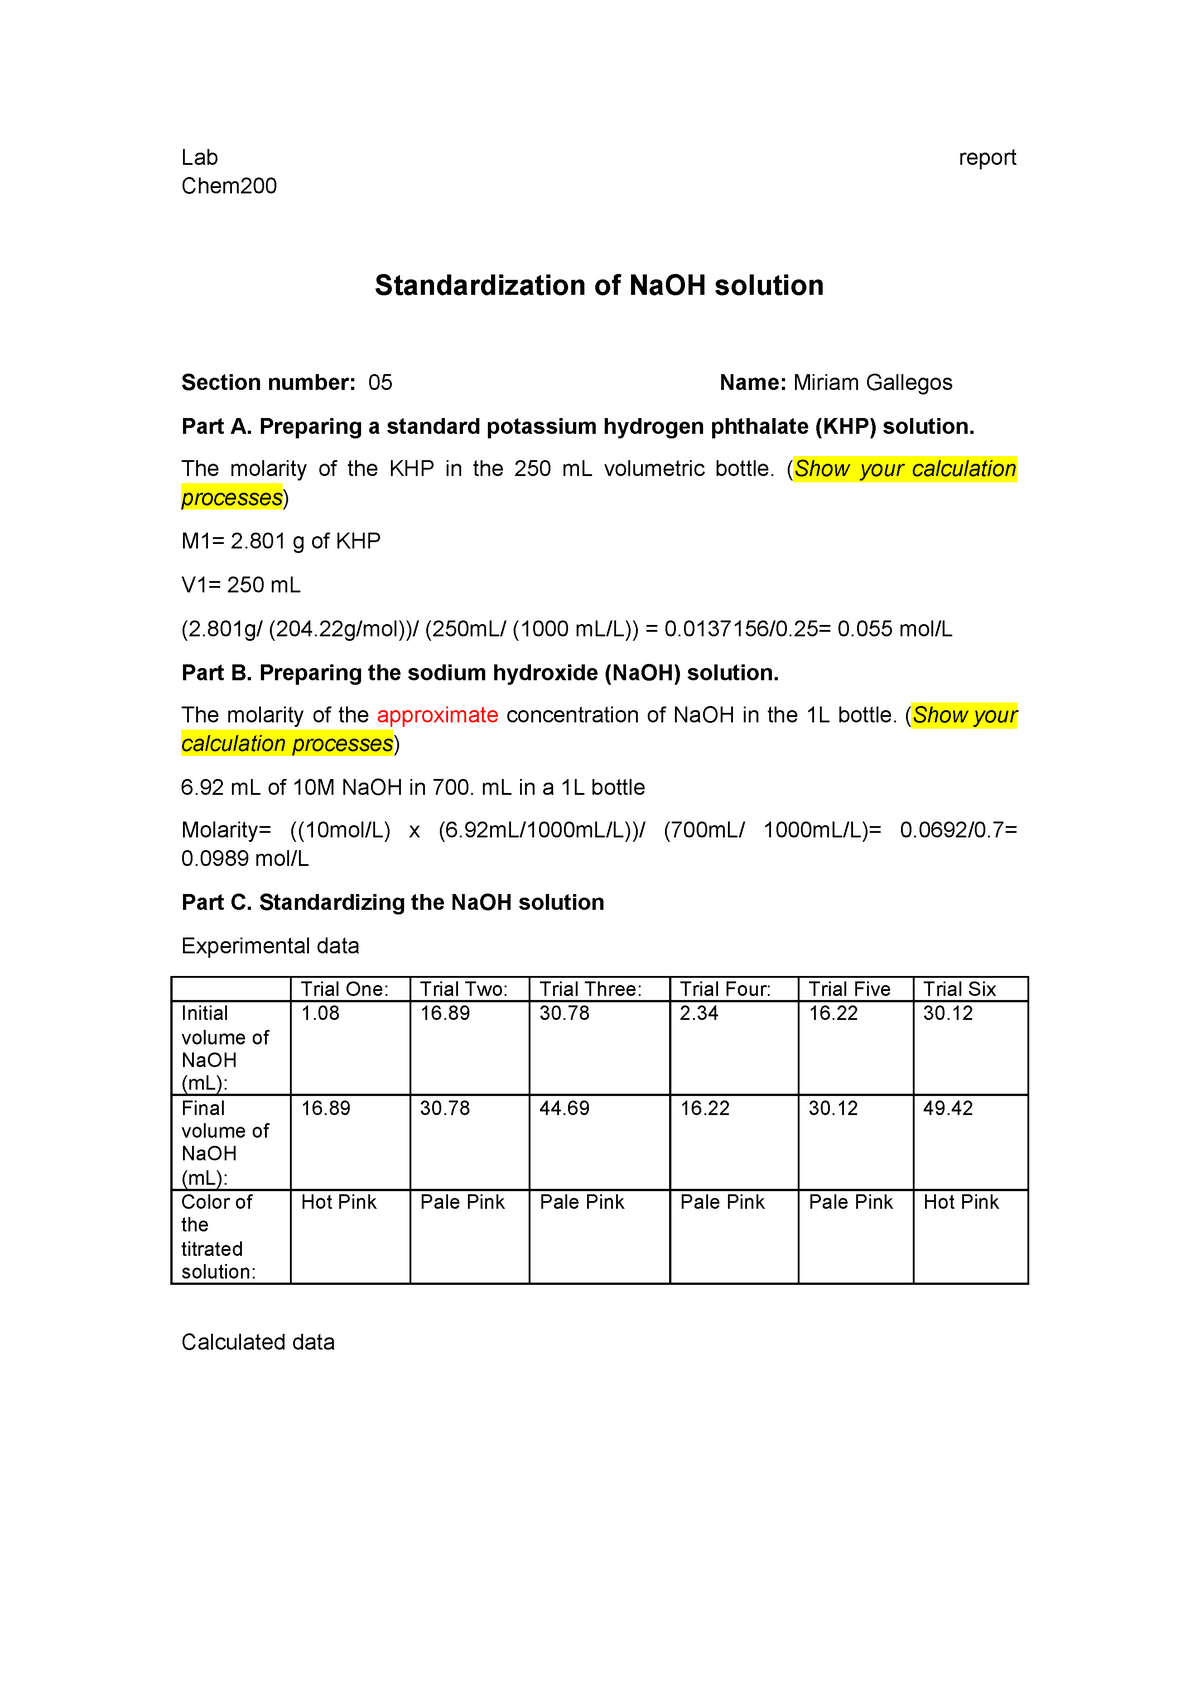 standardisation of naoh